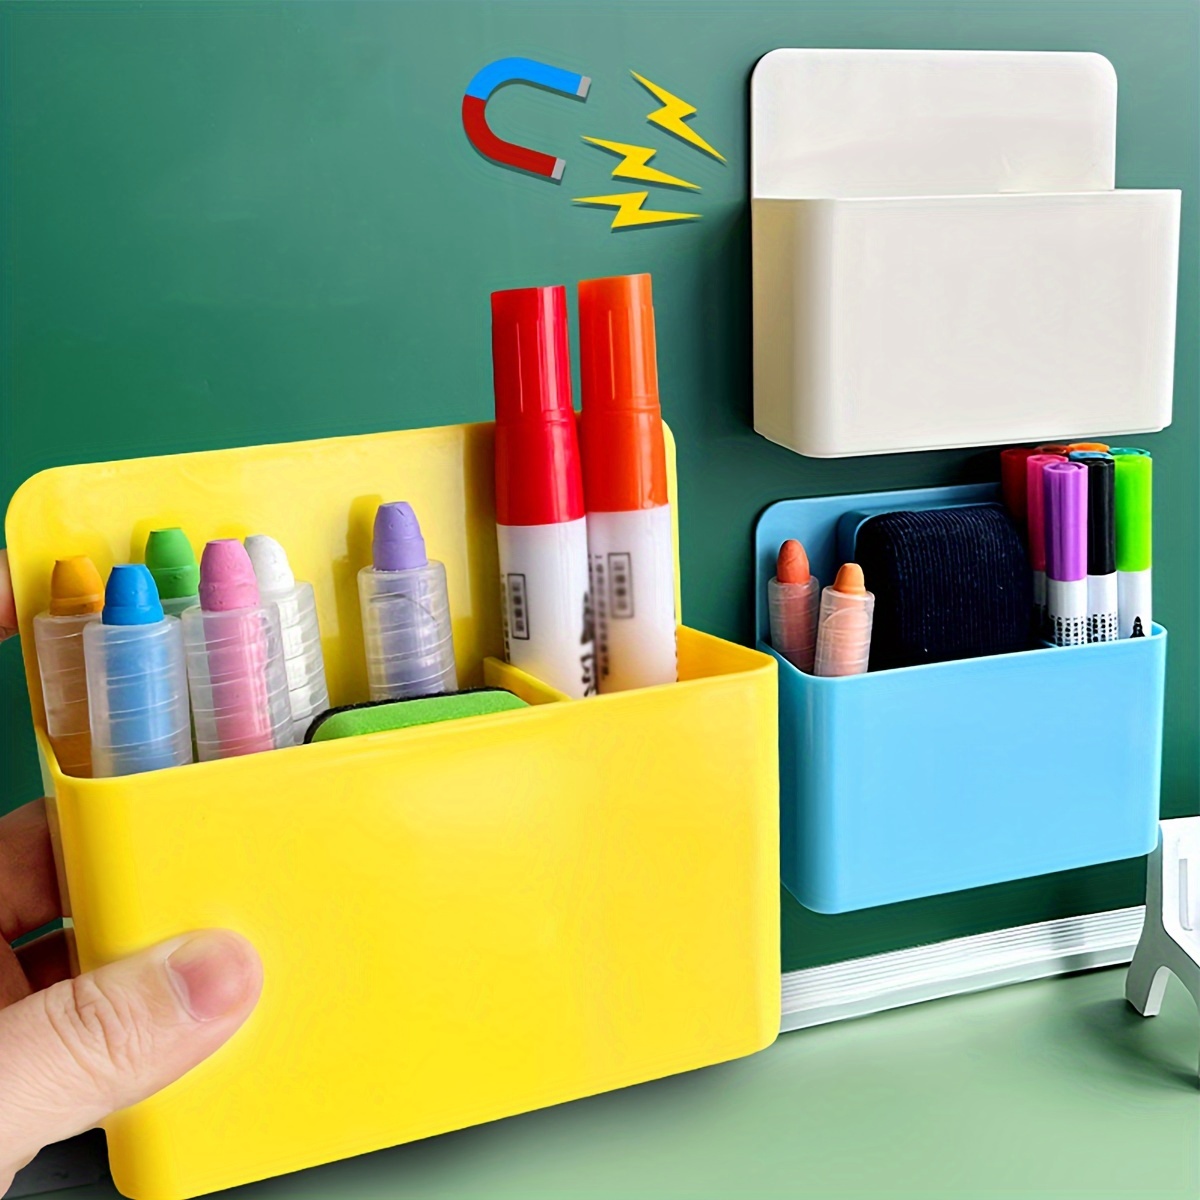 

Large Magnetic Whiteboard & Blackboard Organizer - Adjustable, Multi-functional Pen Holder And Stationery Storage Box